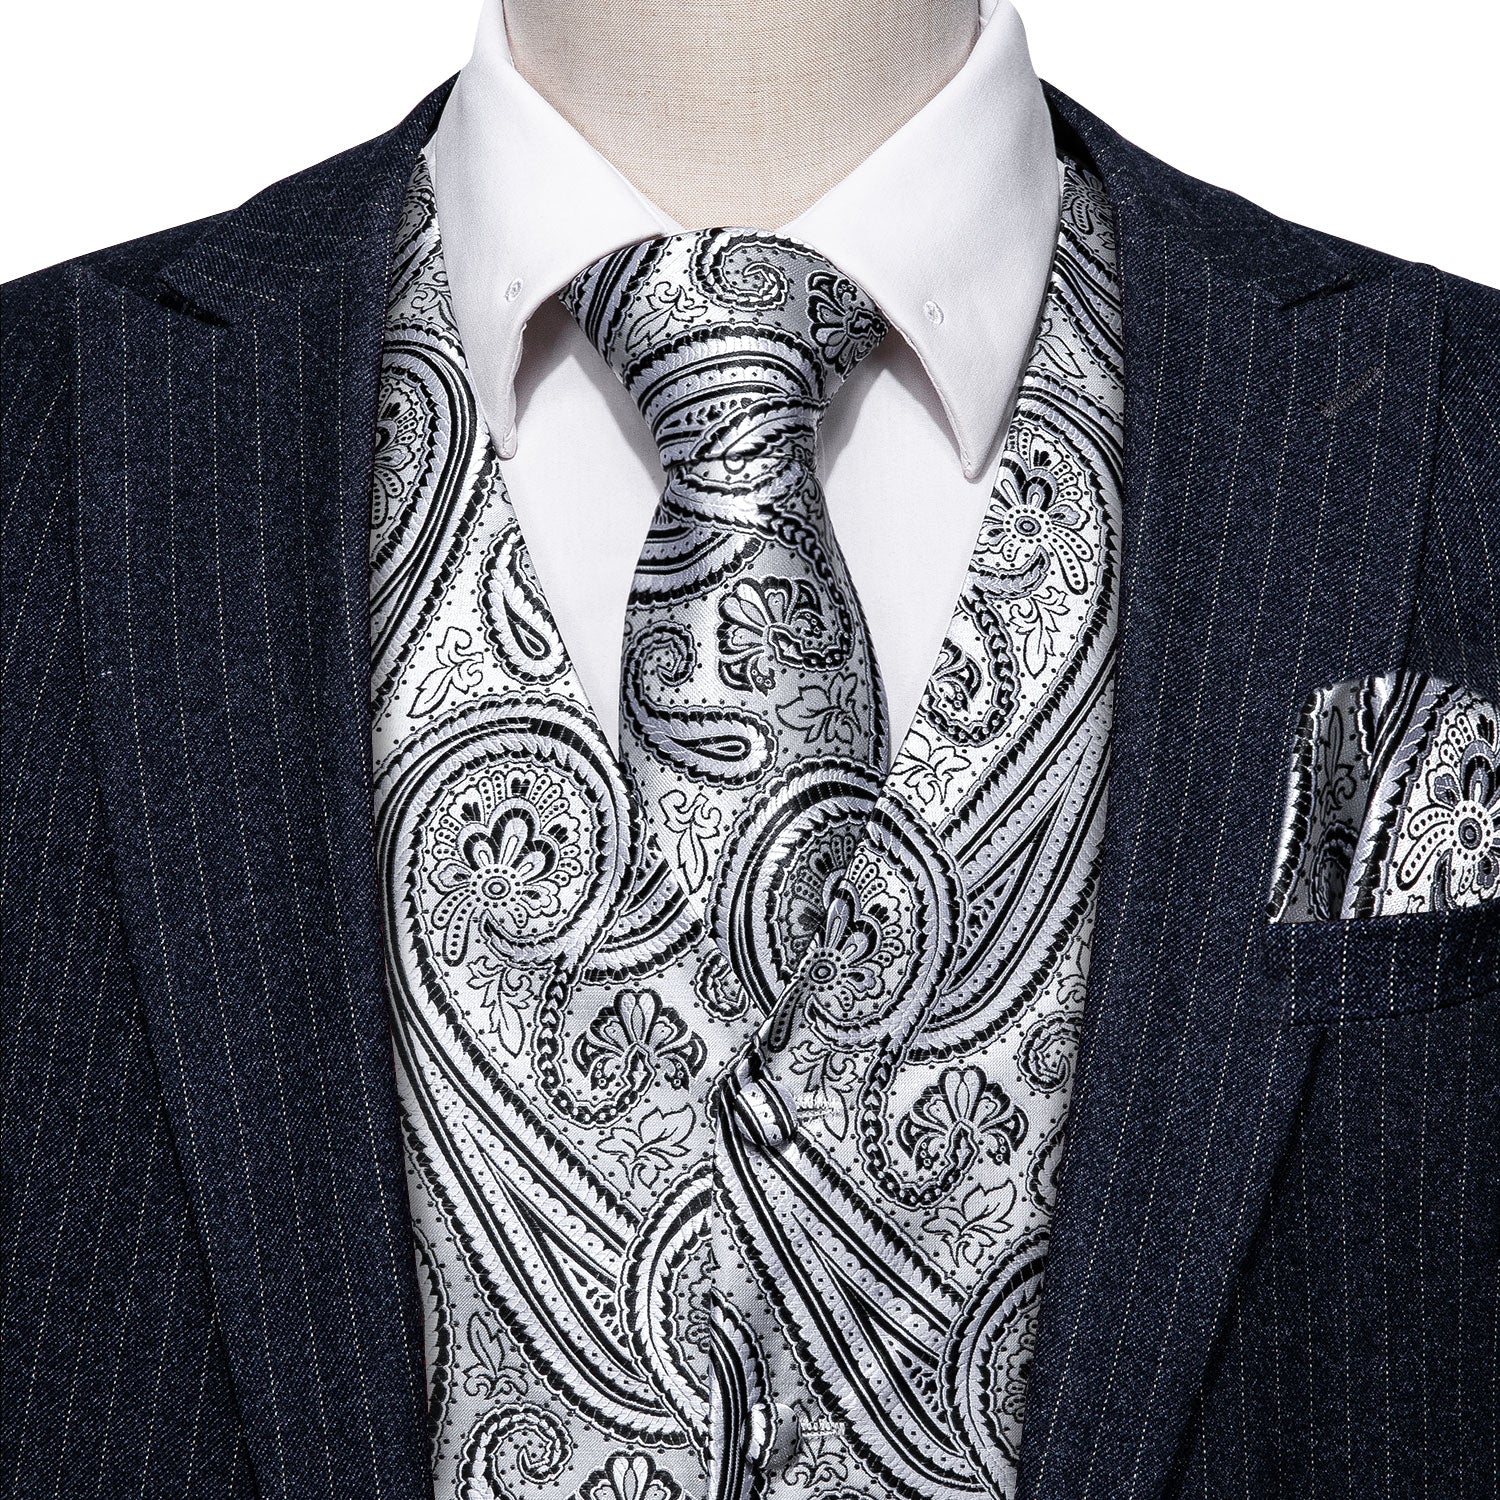 Men's Silver Black Paisley Silk Vest Necktie Pocket square Cufflinks